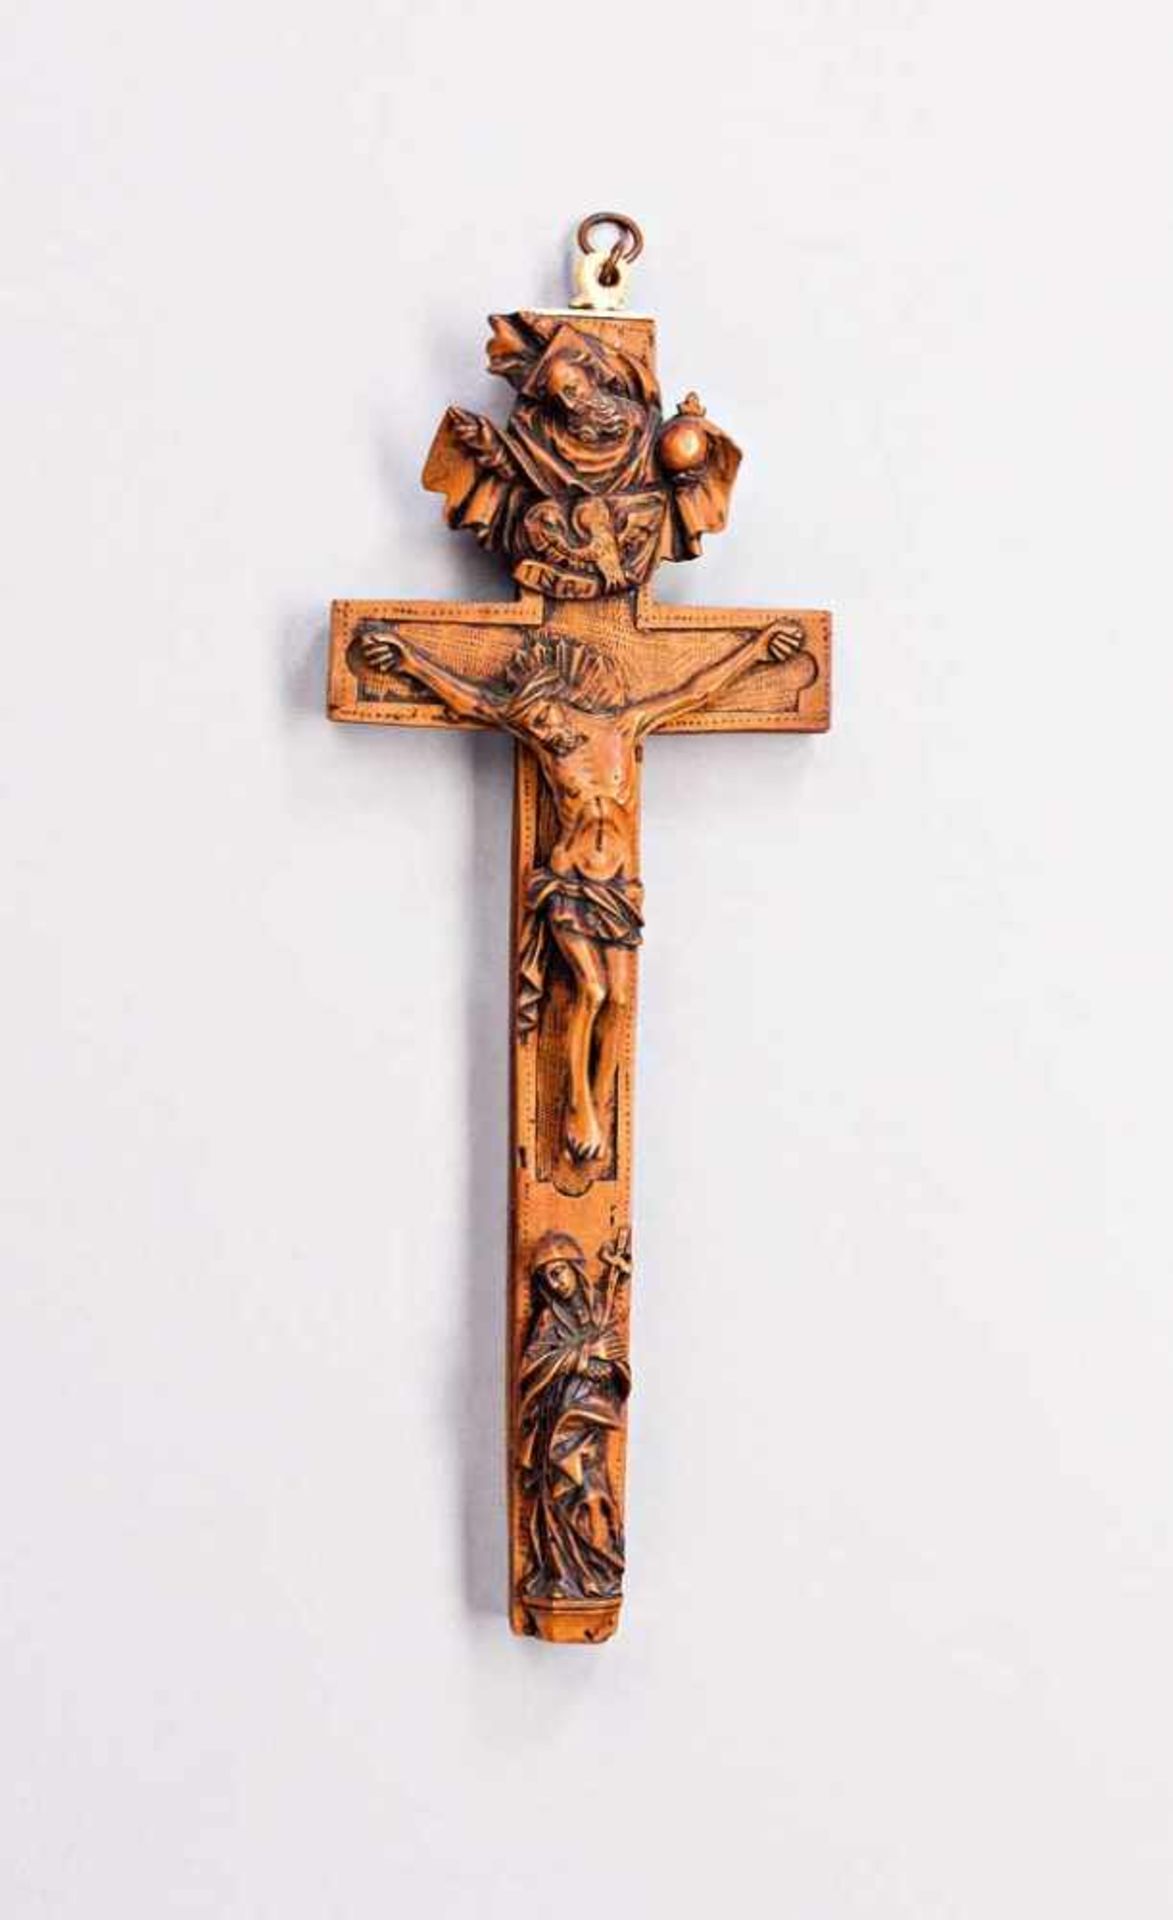 Reliquienkreuz. Gott Vater, Christus und Maria. Reliquien teilweise erhalten. 18. Jh. H 27,5 cm